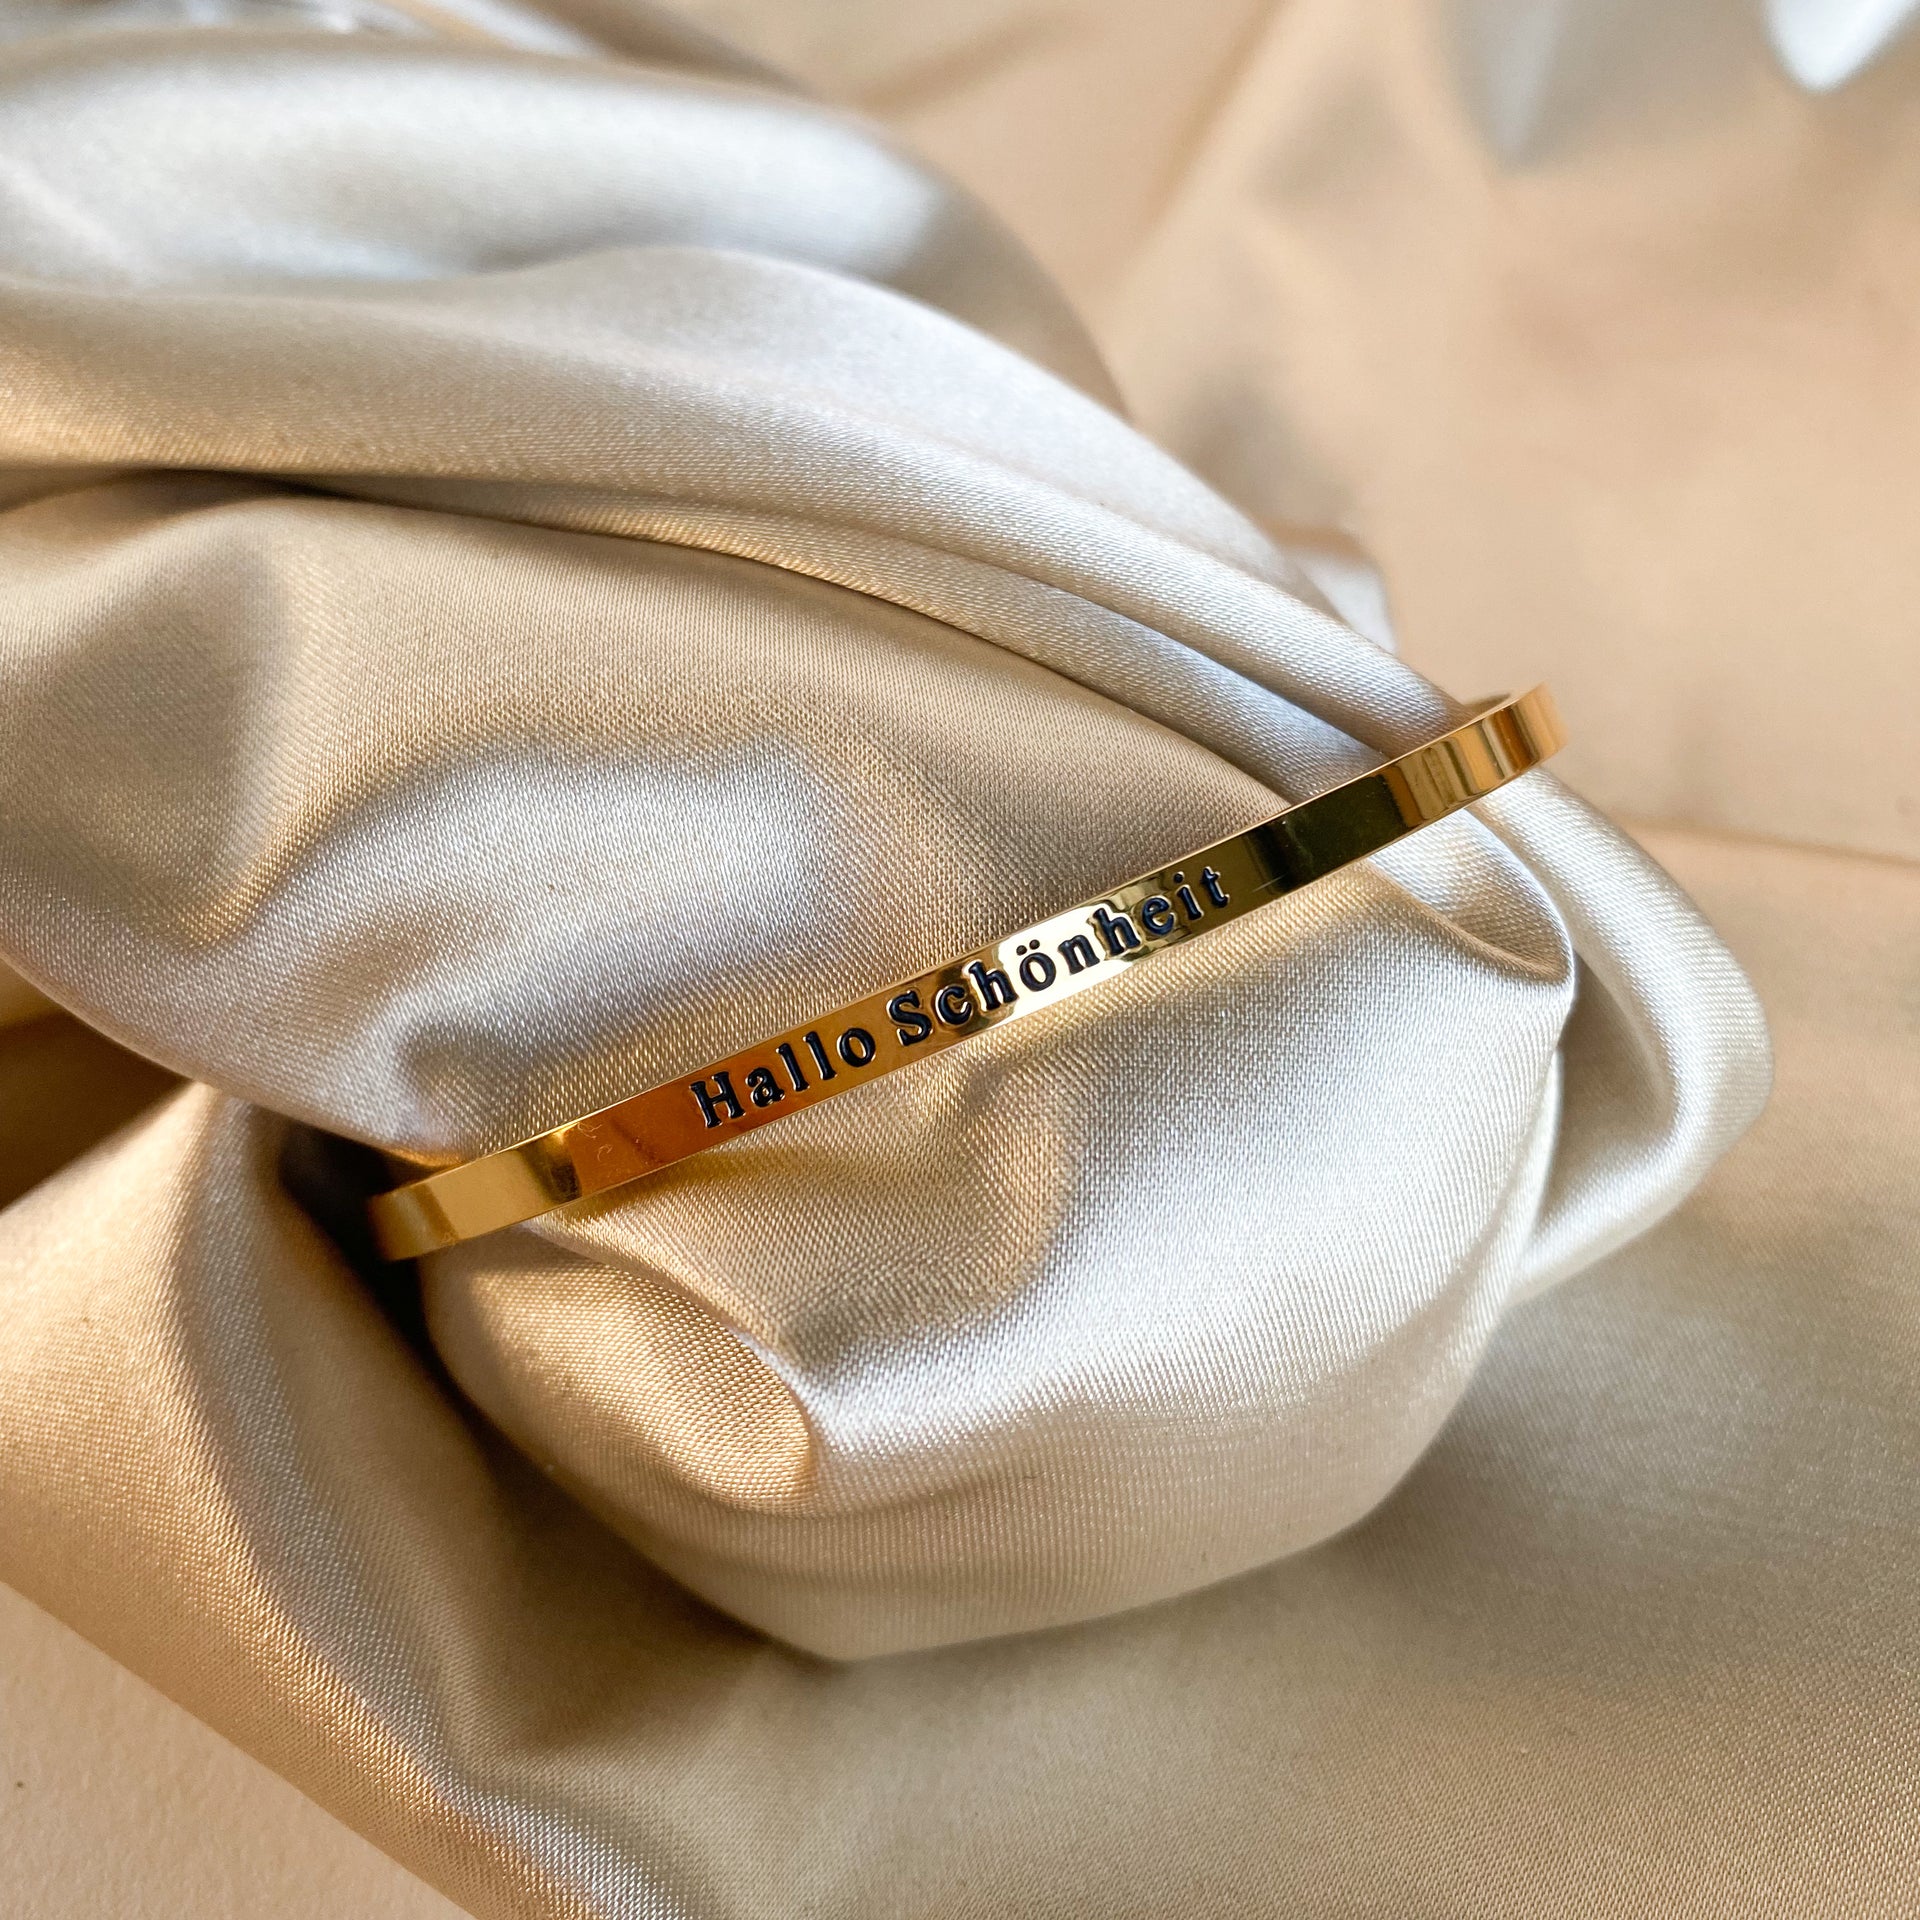 I Silber – organic Schönheit Vanetti Armband Hallo - Gold